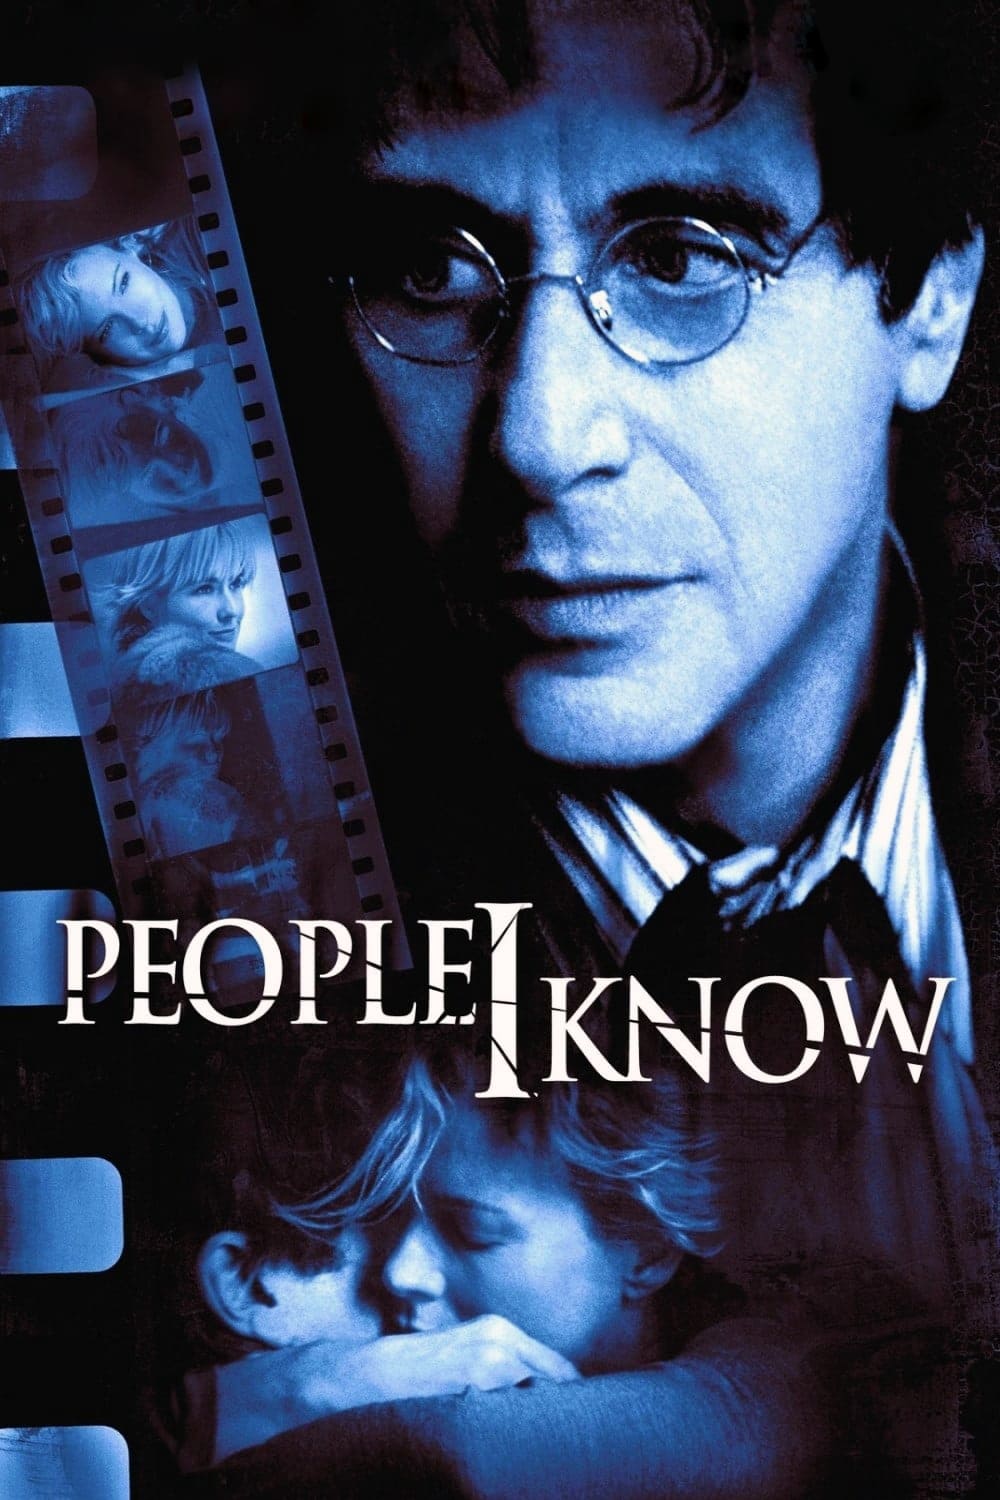 People I Know (2002)